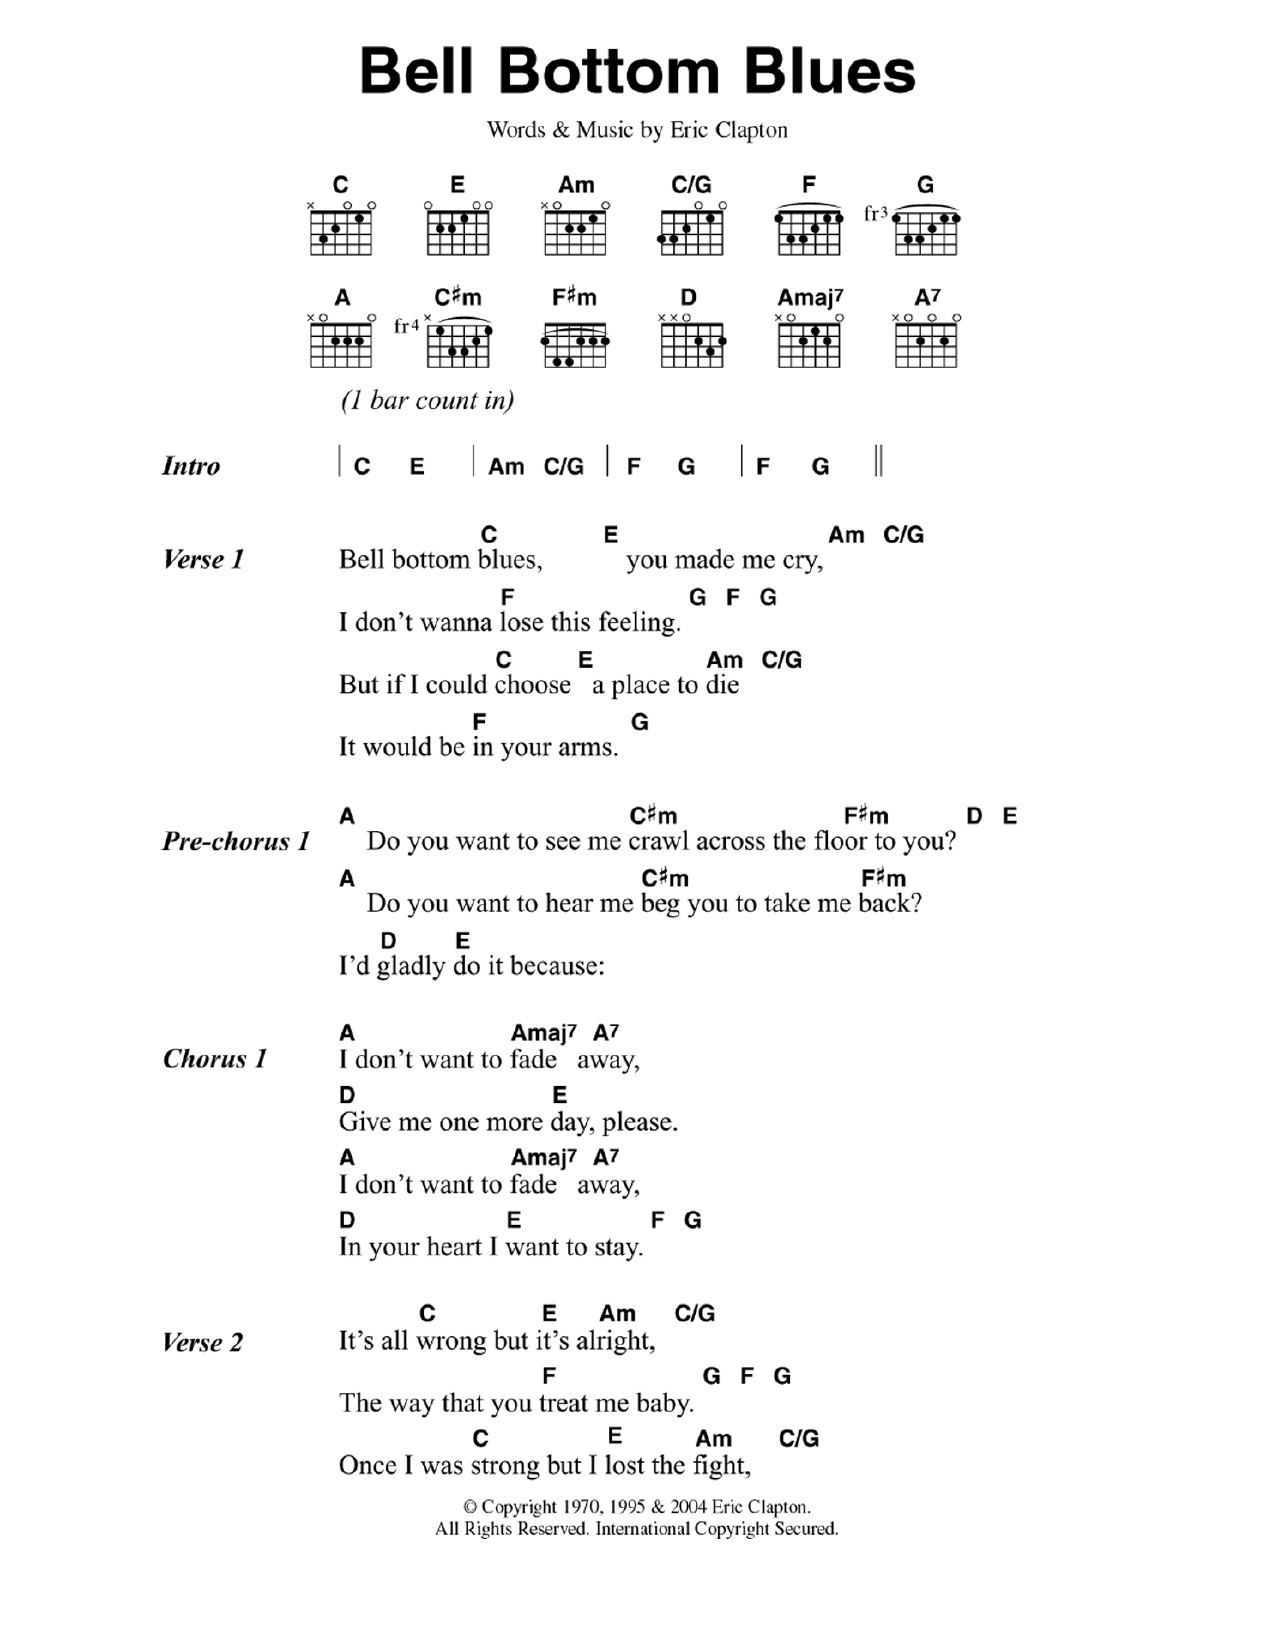 Eric Clapton Bell Bottom Blues Sheet Music Notes & Chords for Lyrics & Chords - Download or Print PDF